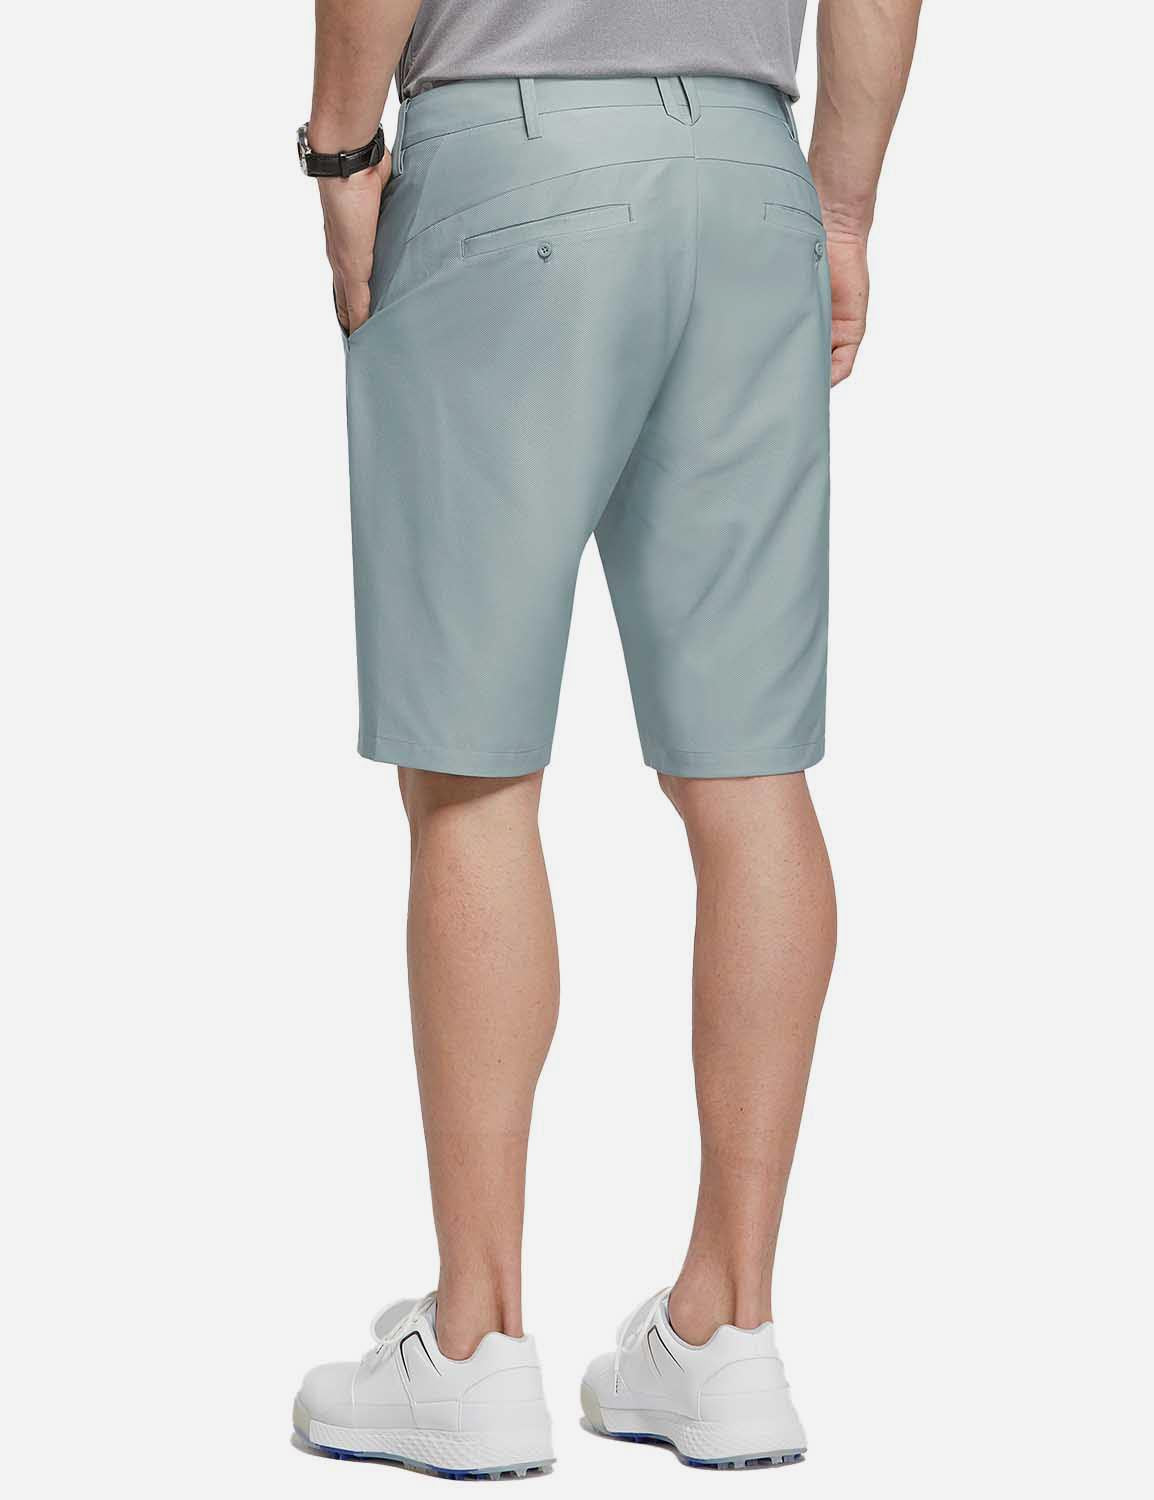 Baleaf Men's 10' UPF 50+ Lightweight Golf Shorts w Zipper Pockets cga005 Blue Back